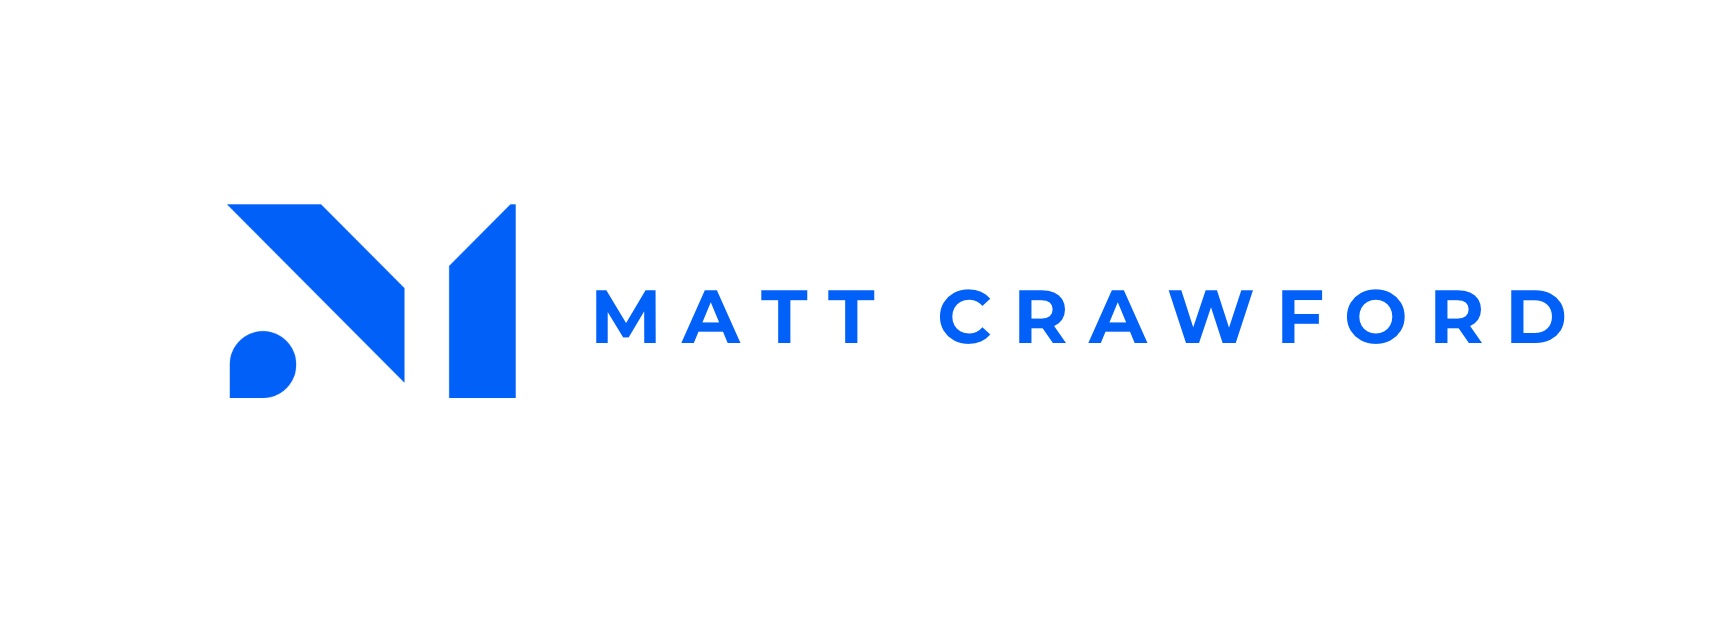 Matt Crawford – Creative Entrepreneur Building Online Businesses